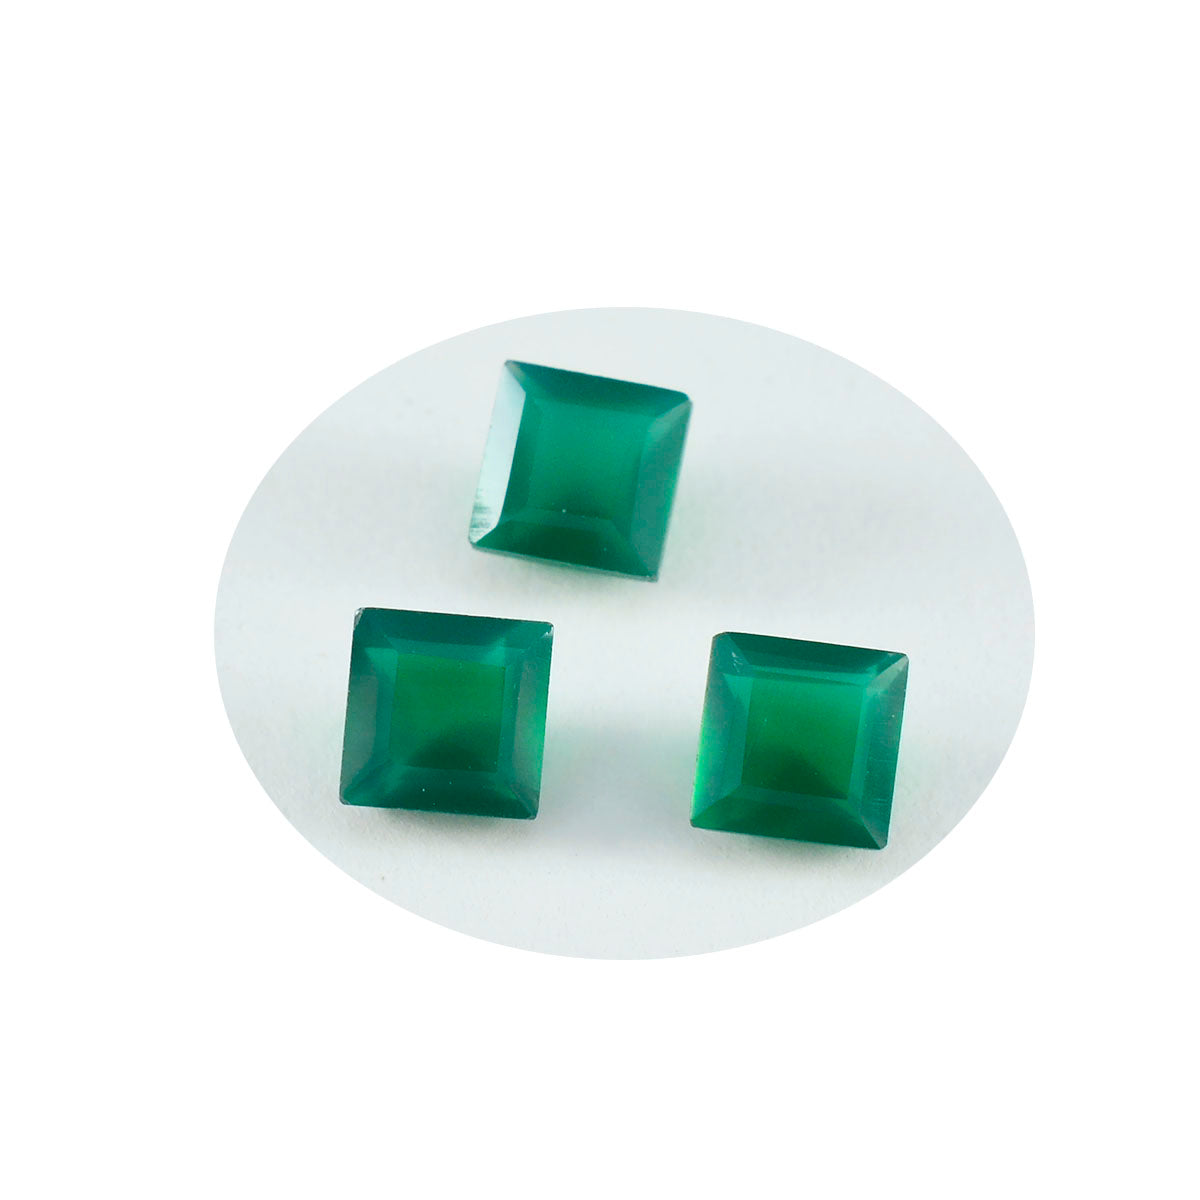 Riyogems 1 Stück echter grüner Onyx, facettiert, 8 x 8 mm, quadratische Form, hübscher Qualitätsstein